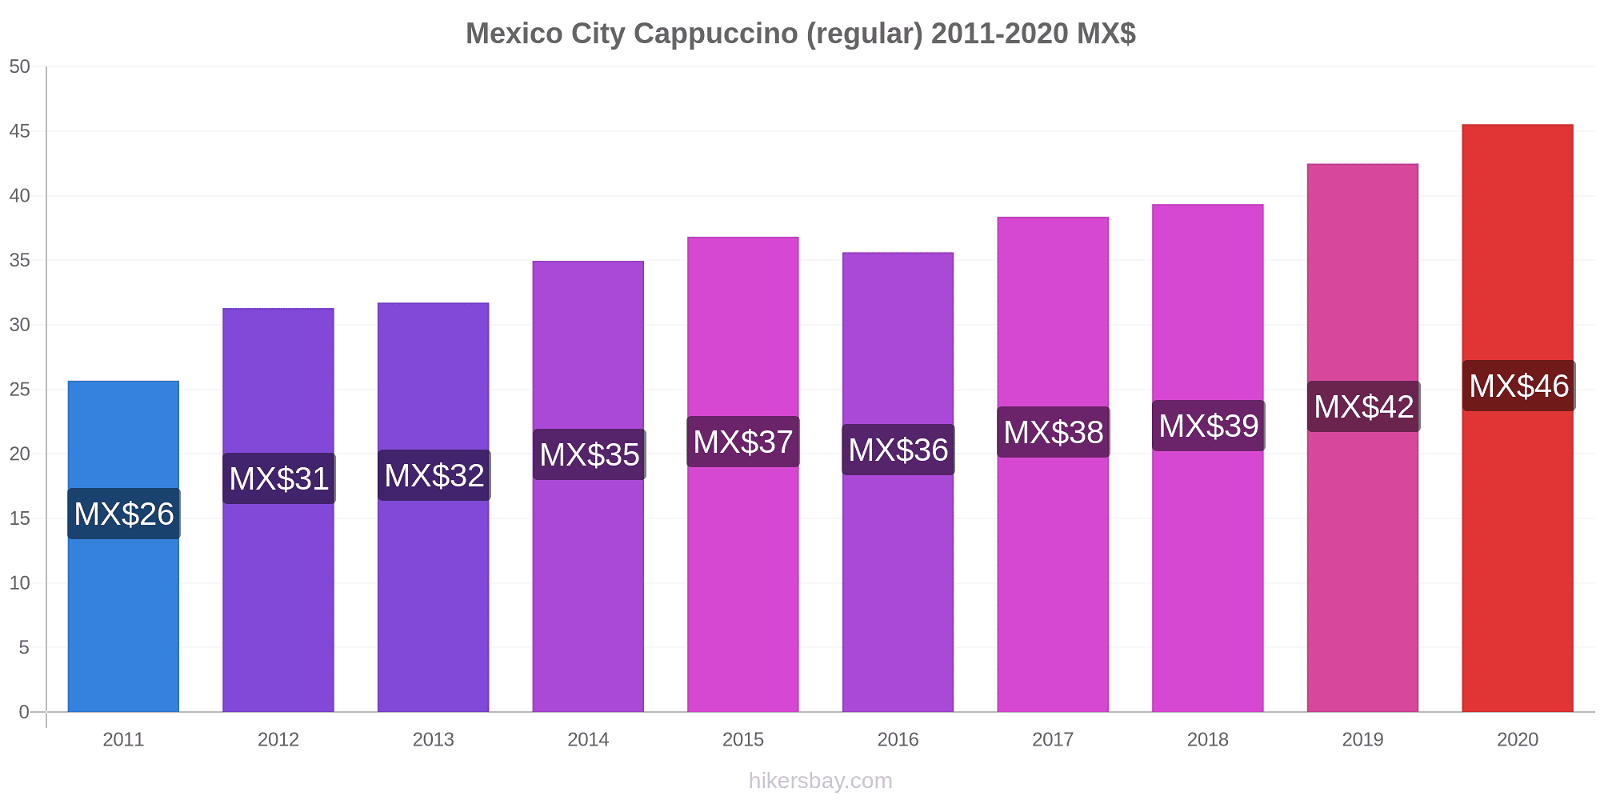 Mexico City price changes Cappuccino (regular) hikersbay.com